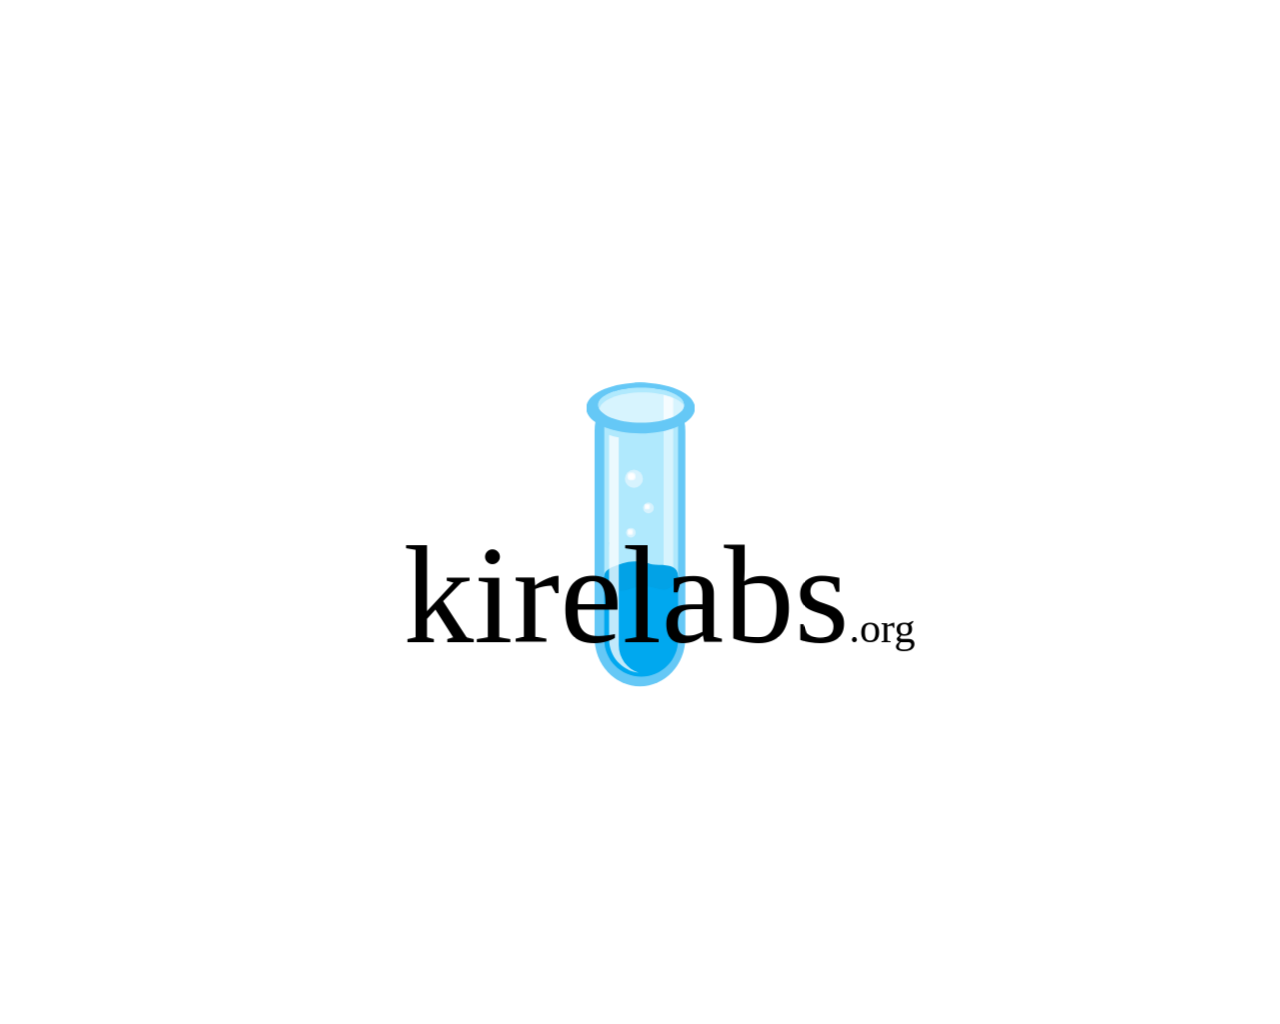 kirelabs.org